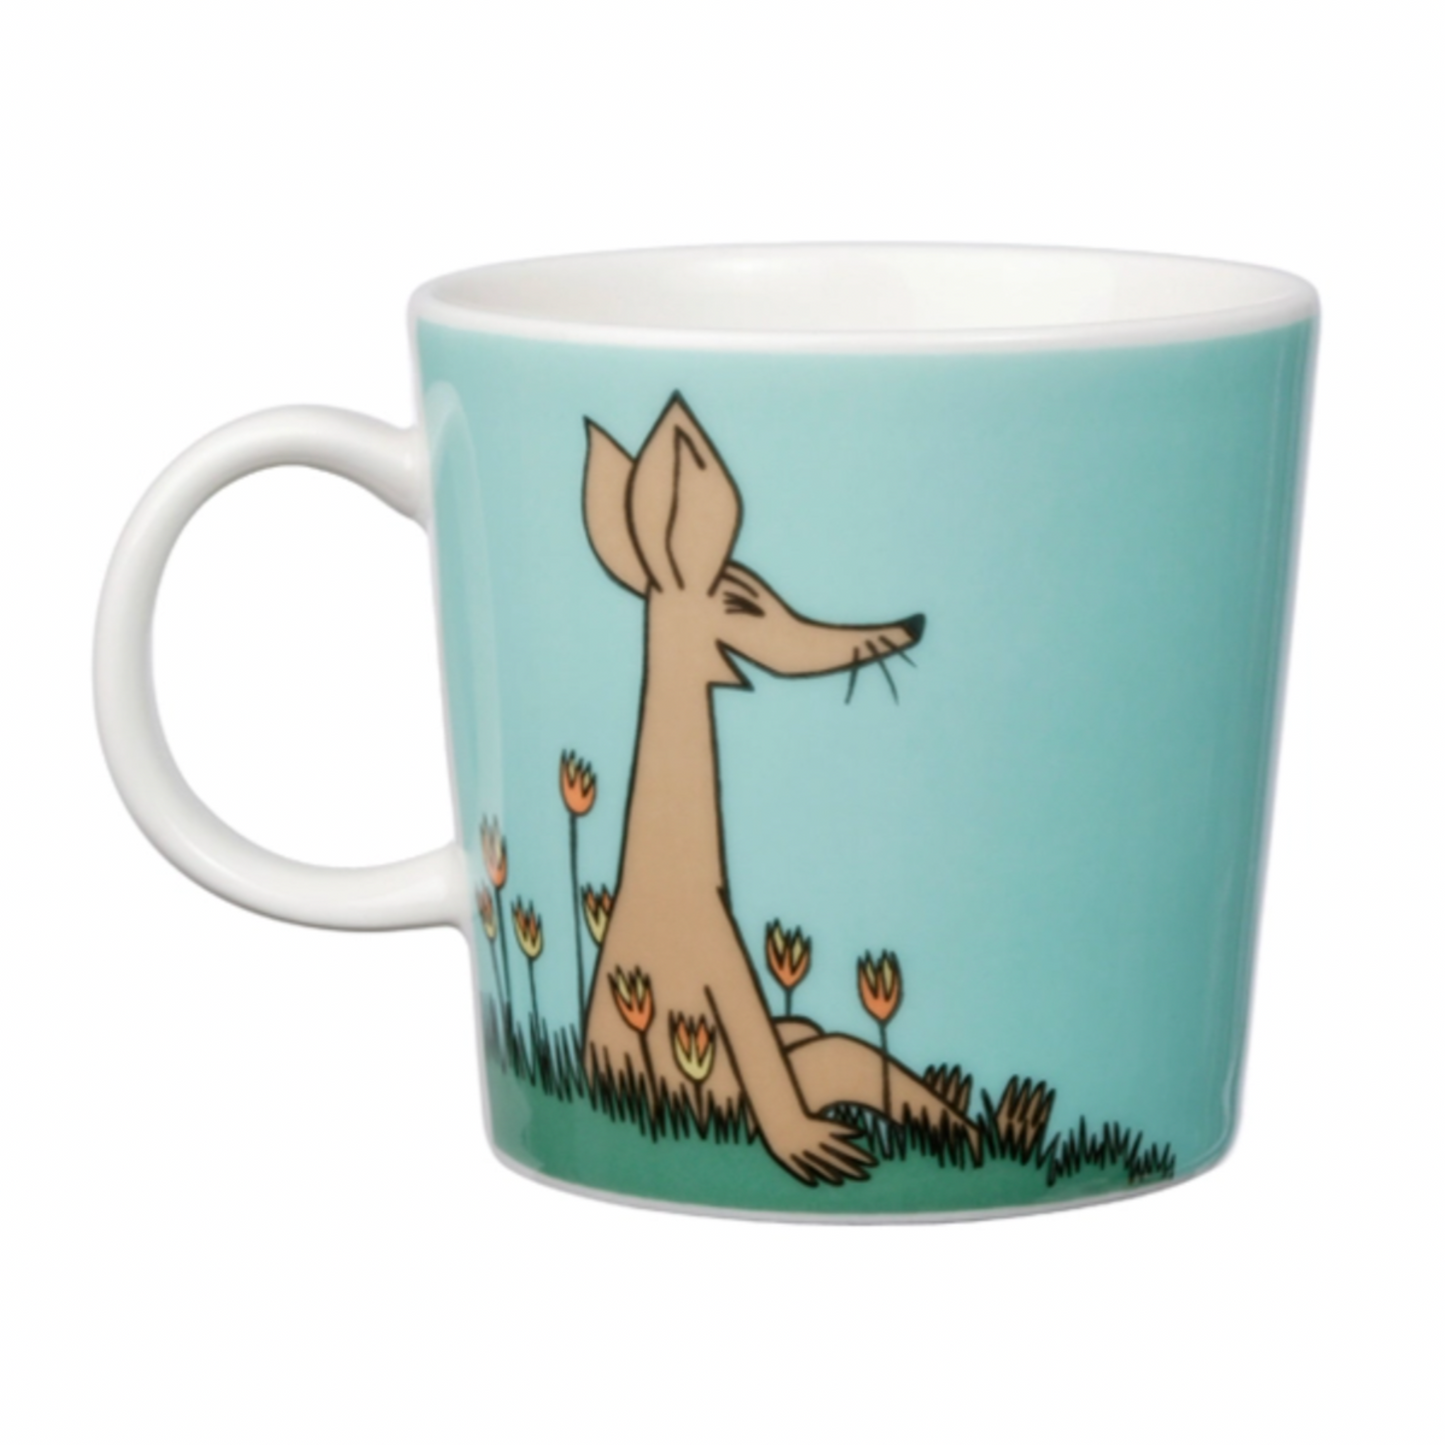 Moomin Mug by Arabia, Sniff (4165937692737)